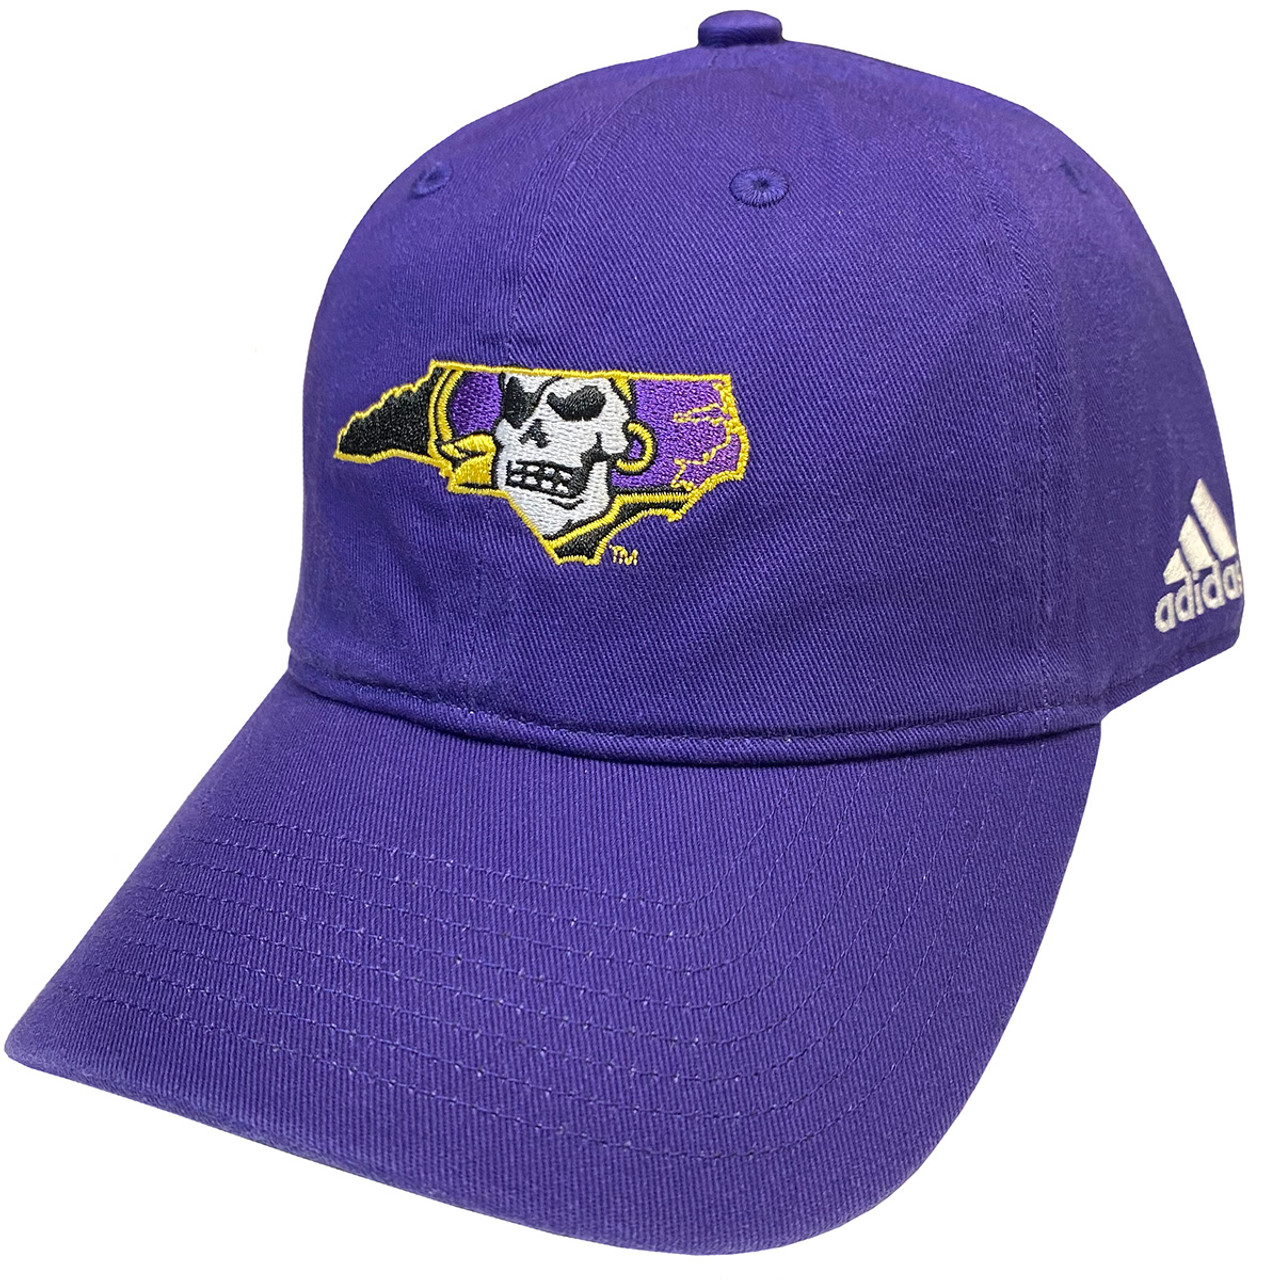 Purple Pirate State Of Mind Adidas Cap - University Book Exchange